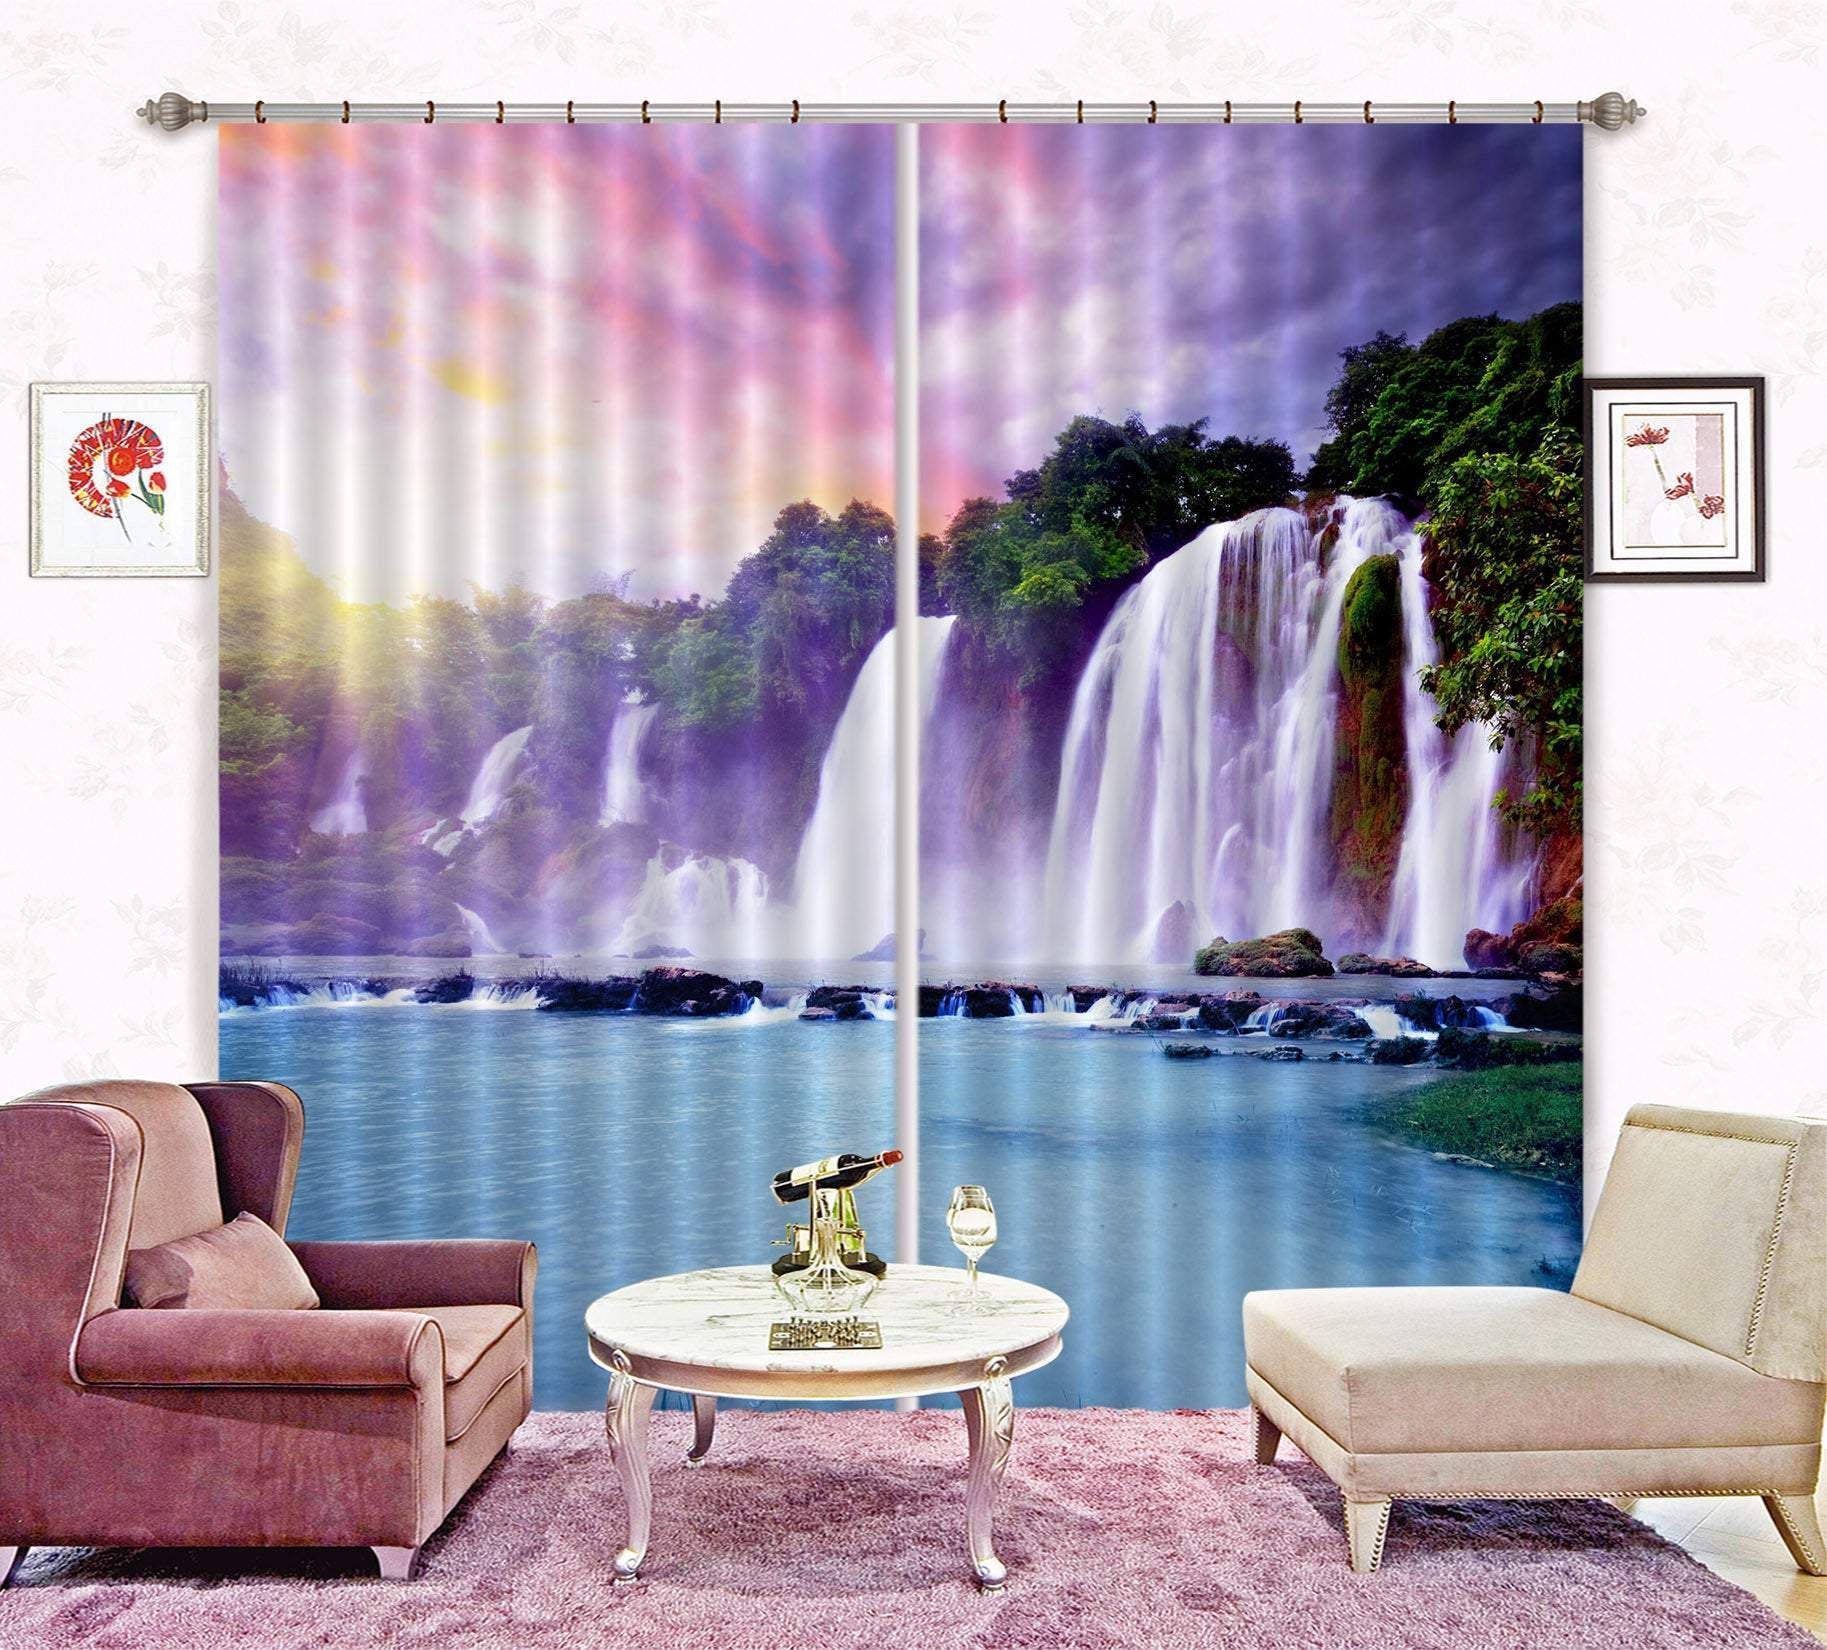 3D Waterfall And Purple Sky Printed Window Curtain